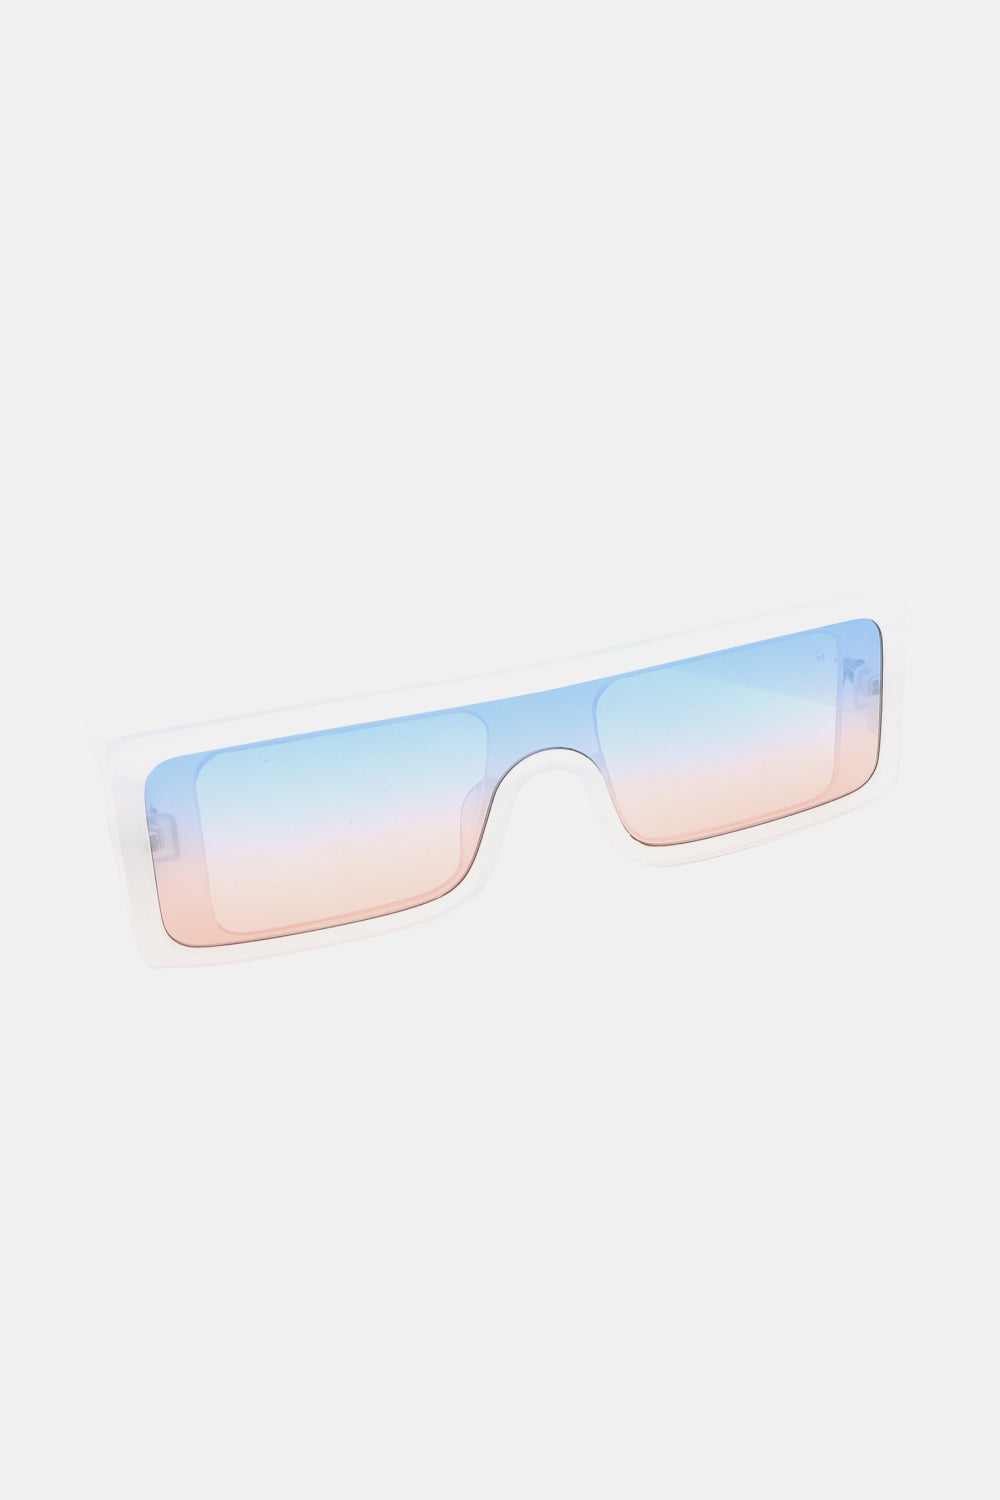 Polycarbonate Frame Rectangle Sunglasses - Sunglasses - FITGGINS